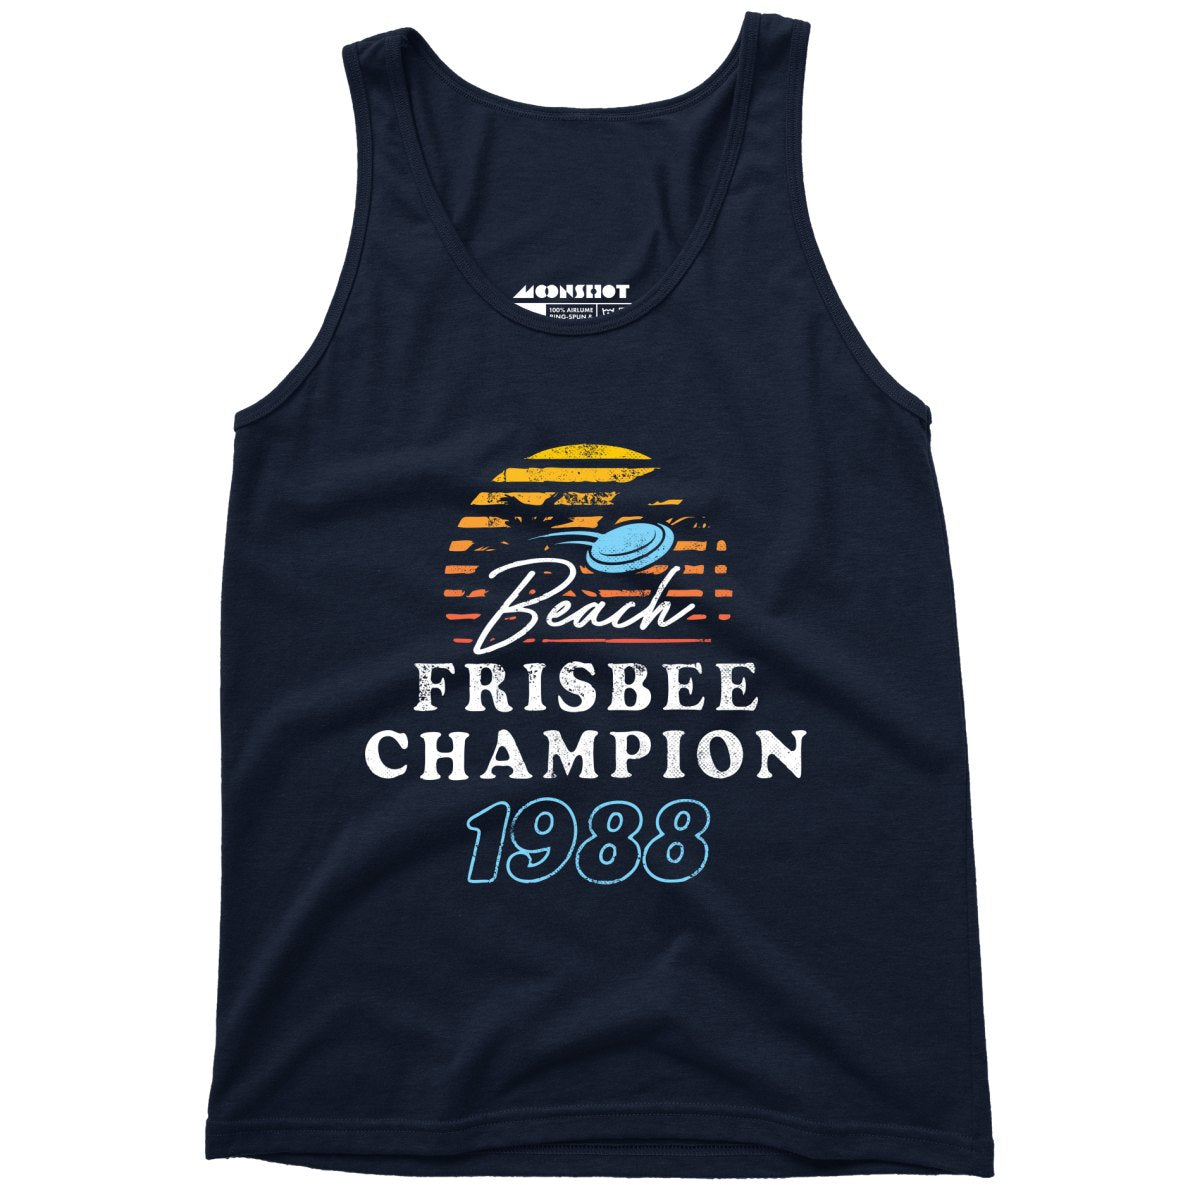 Beach Frisbee Champion 1988 - Unisex Tank Top